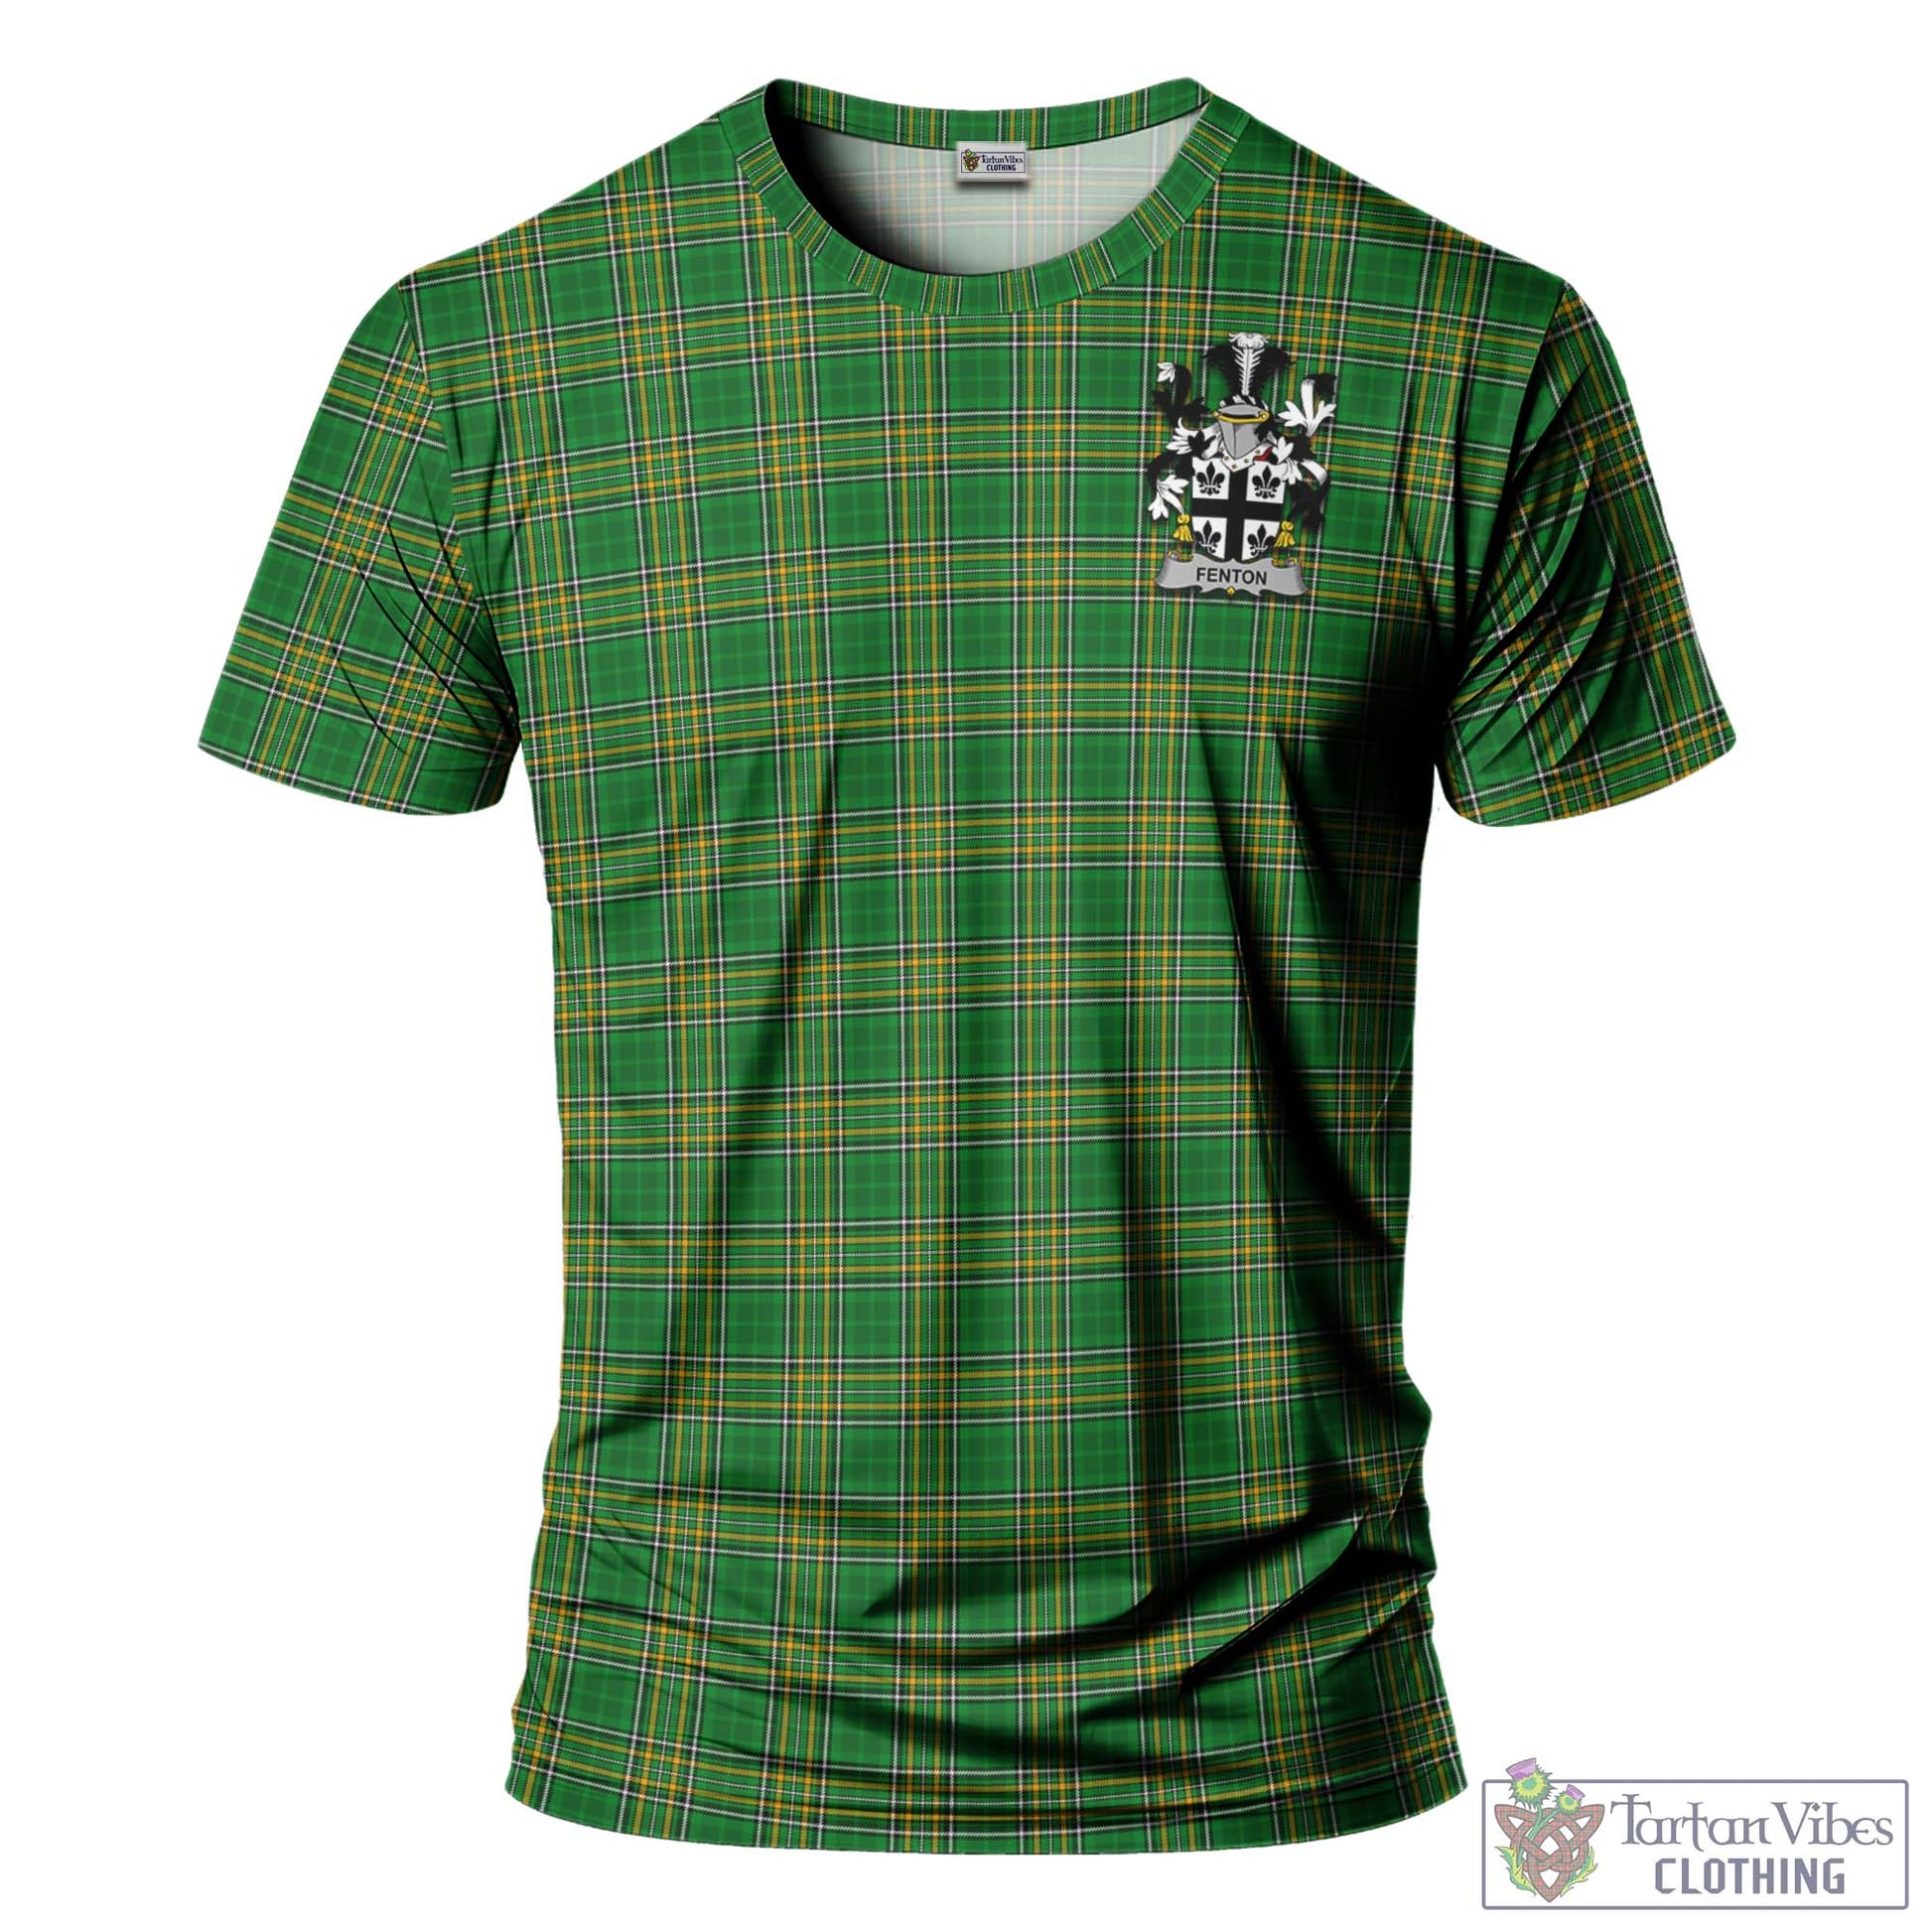 Tartan Vibes Clothing Fenton Ireland Clan Tartan T-Shirt with Family Seal